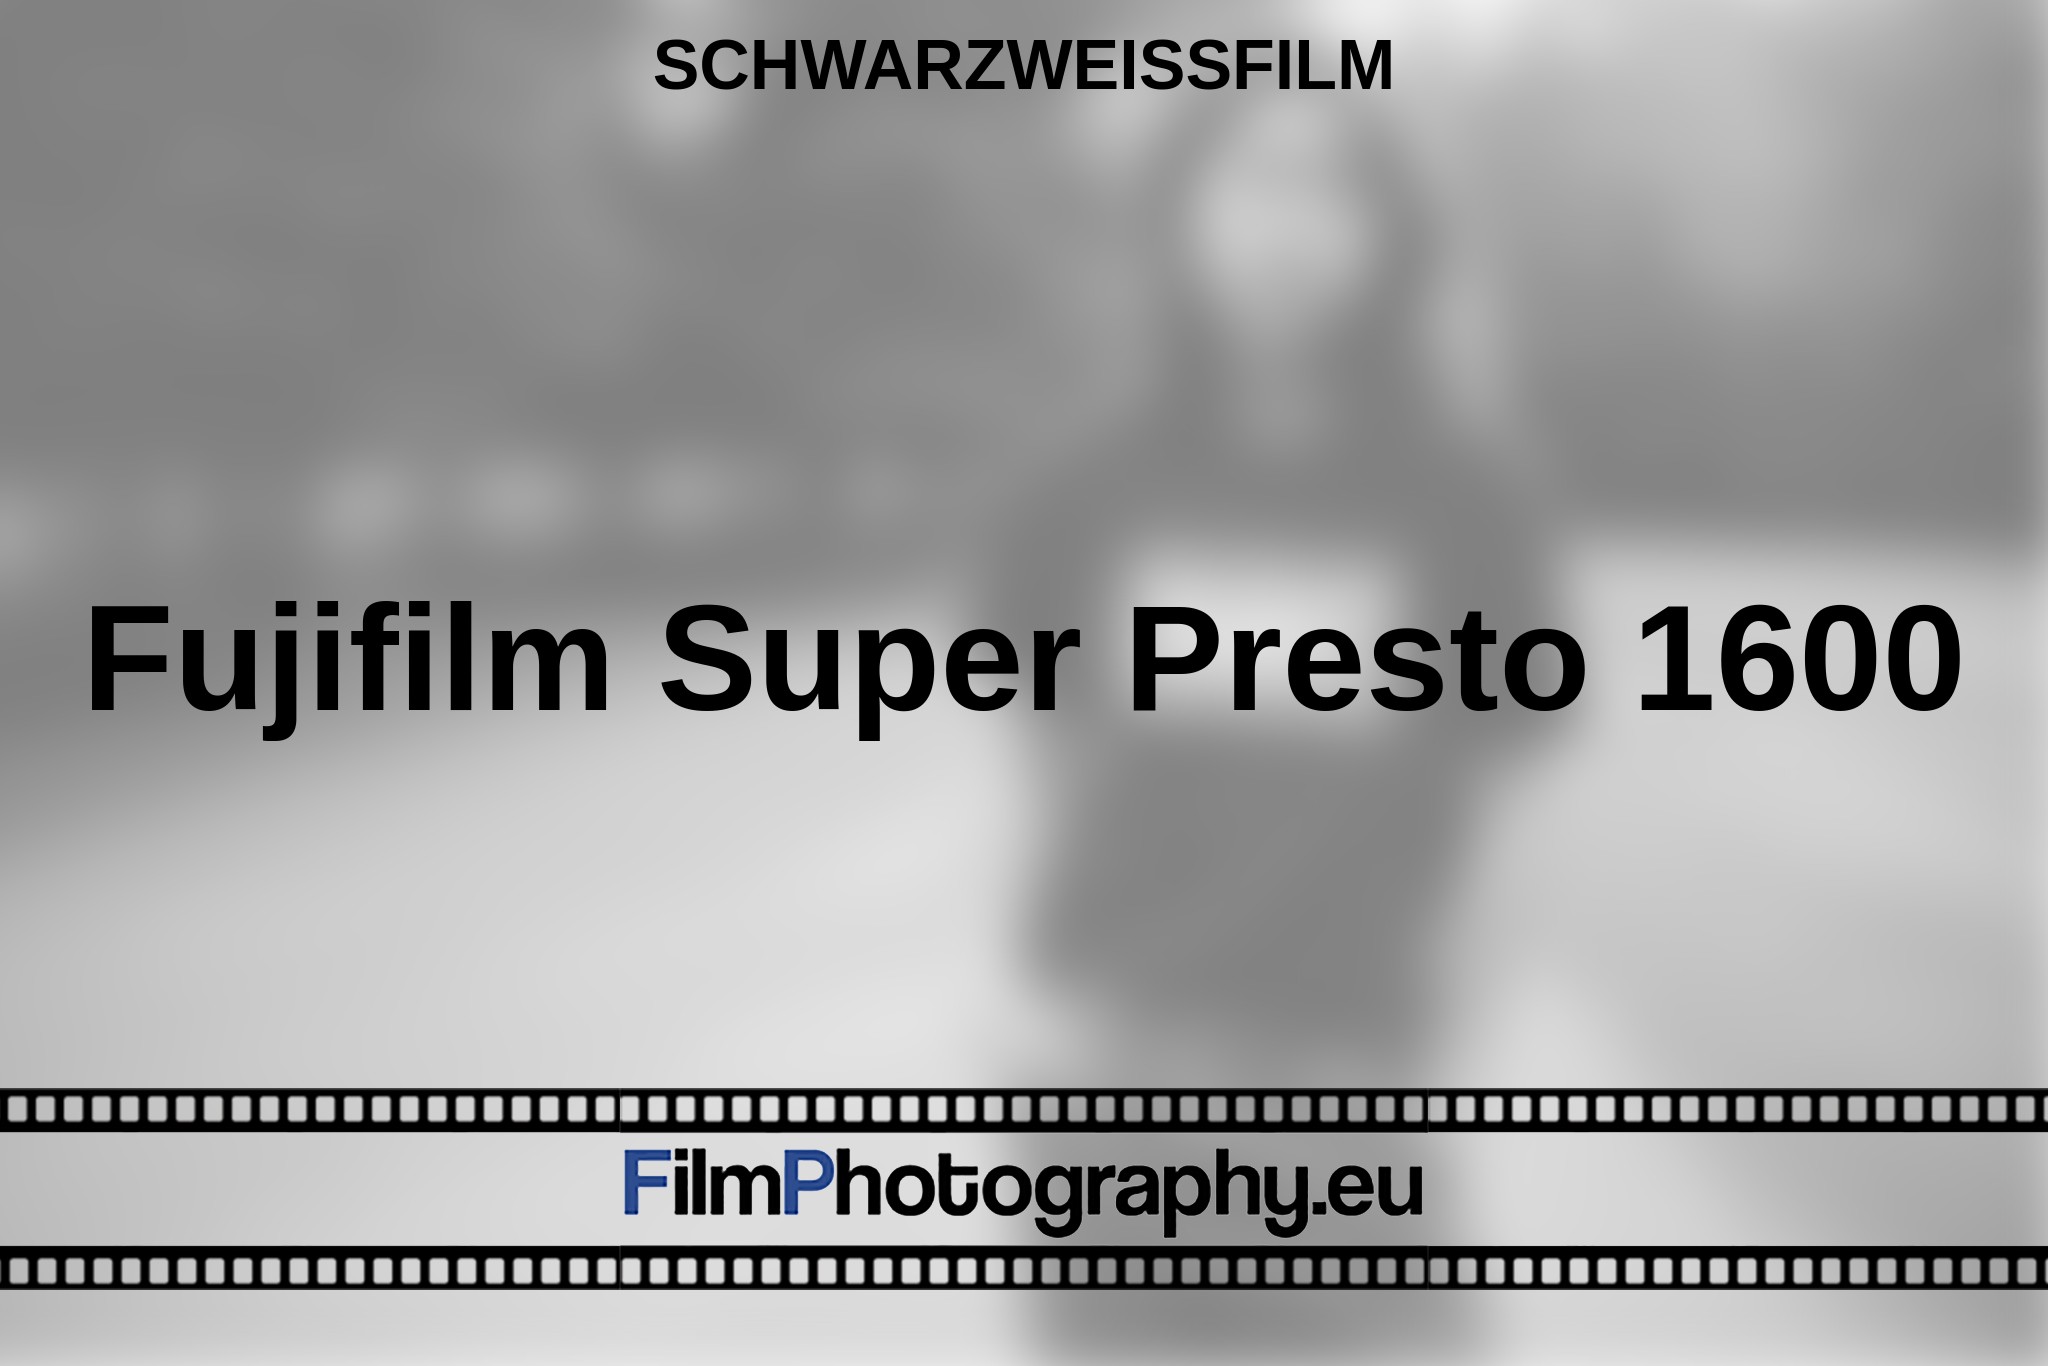 fujifilm-super-presto-1600-schwarzweißfilm-bnv.jpg